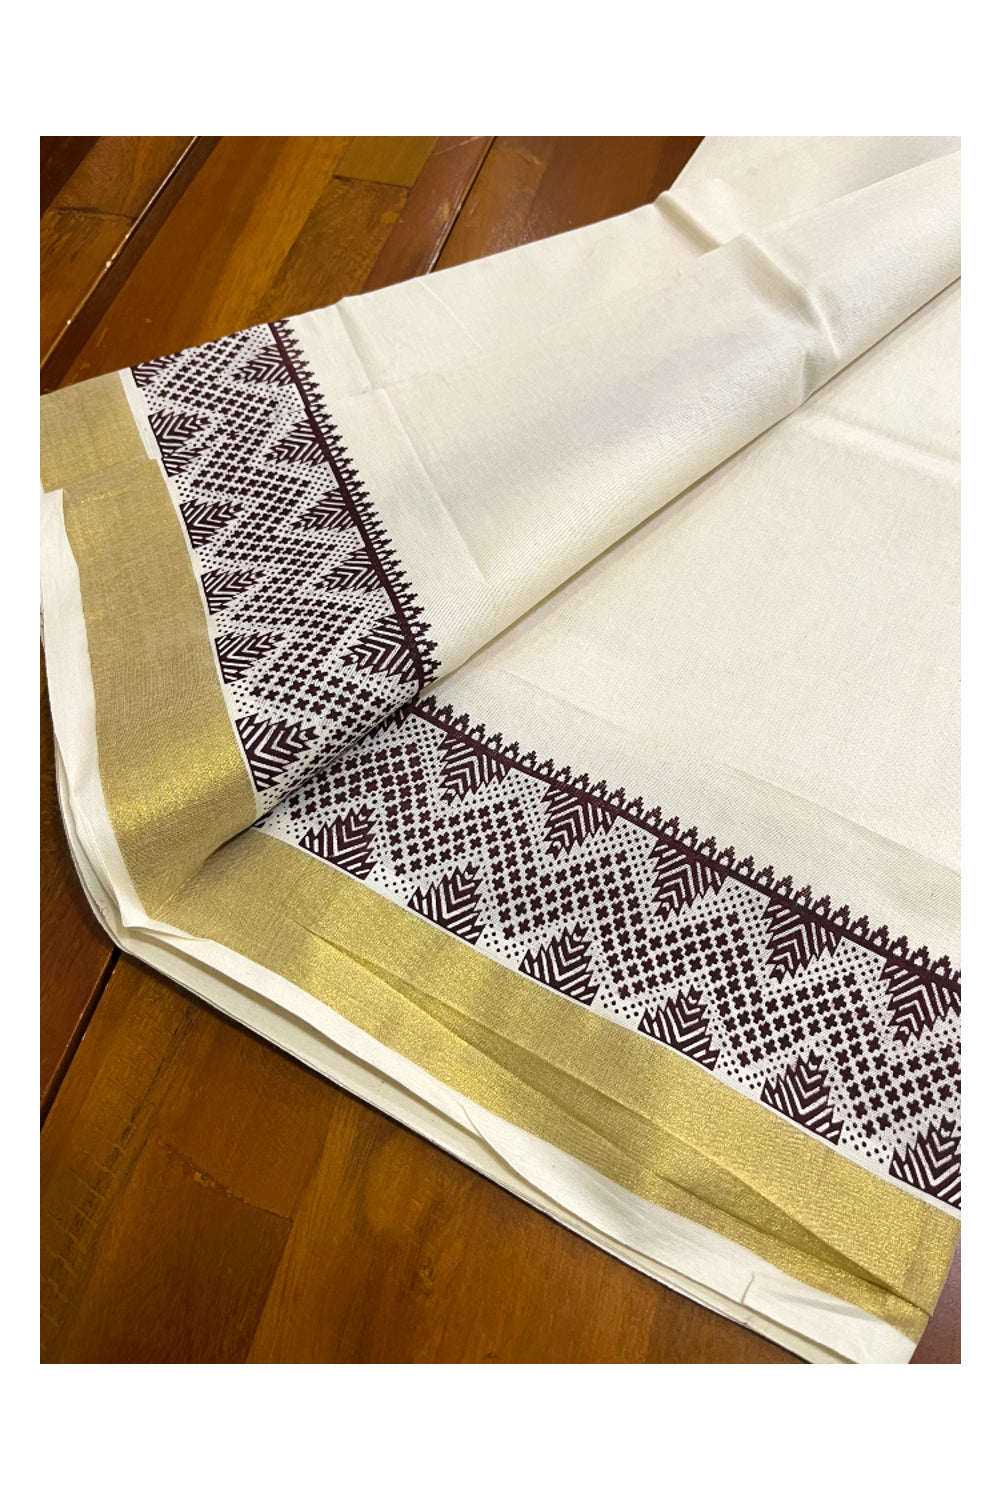 Kerala Cotton Single Set Mundu (Mundum Neriyathum) with Brown Block Prints and Kasavu Border - 2.80Mtrs